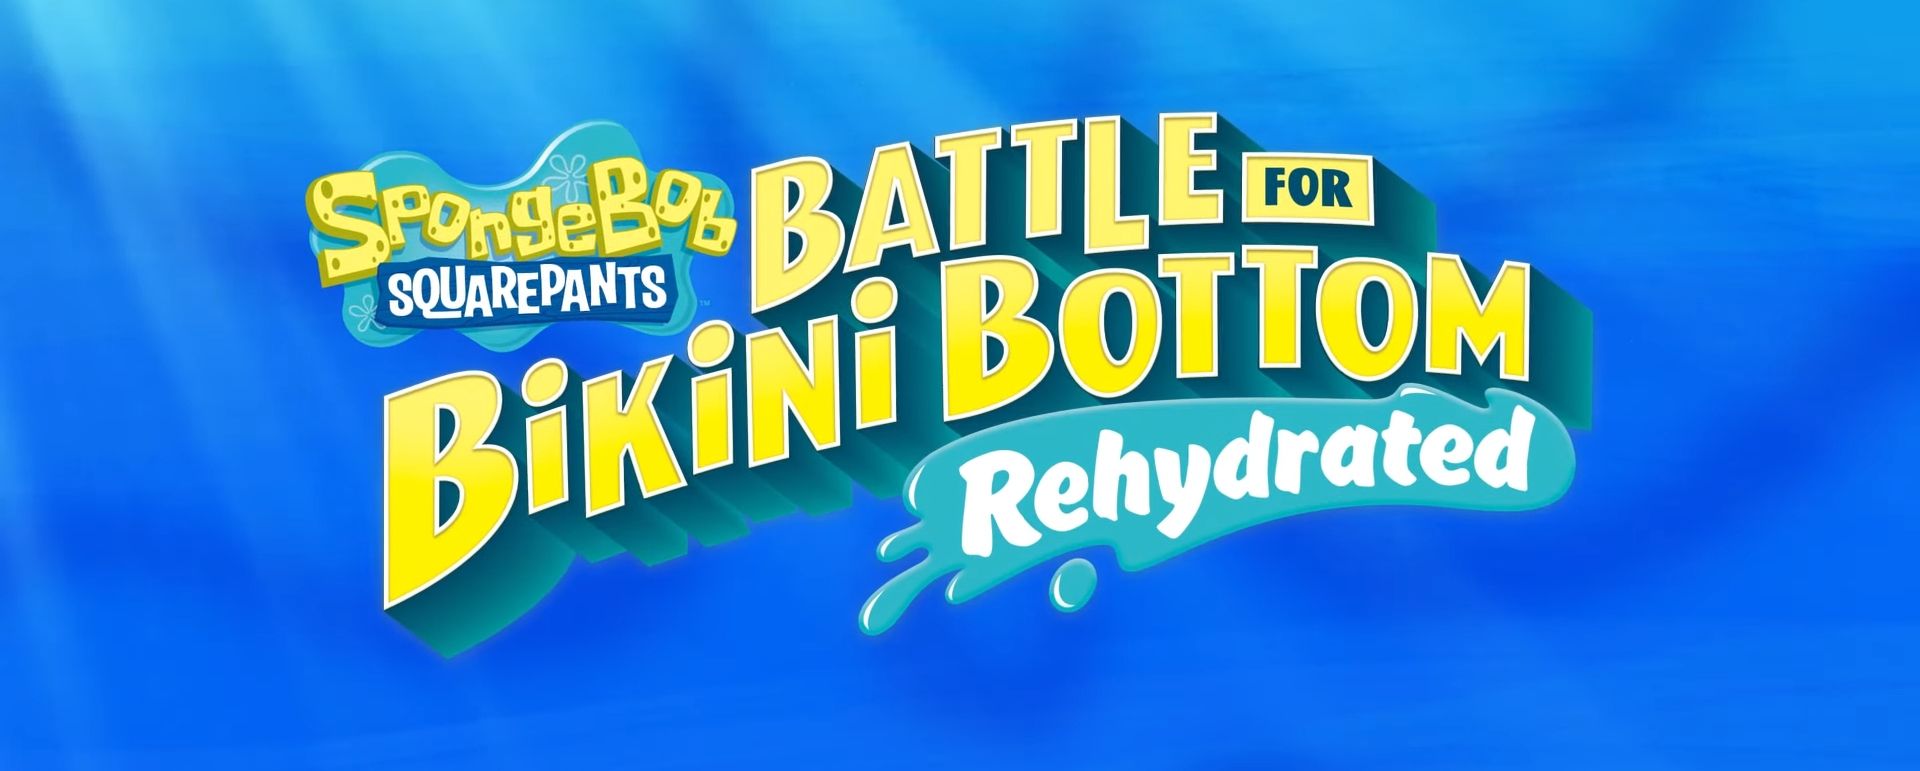 SpongeBob SquarePants: Battle for Bikini Bottom Rehydrated playable at Gamescom